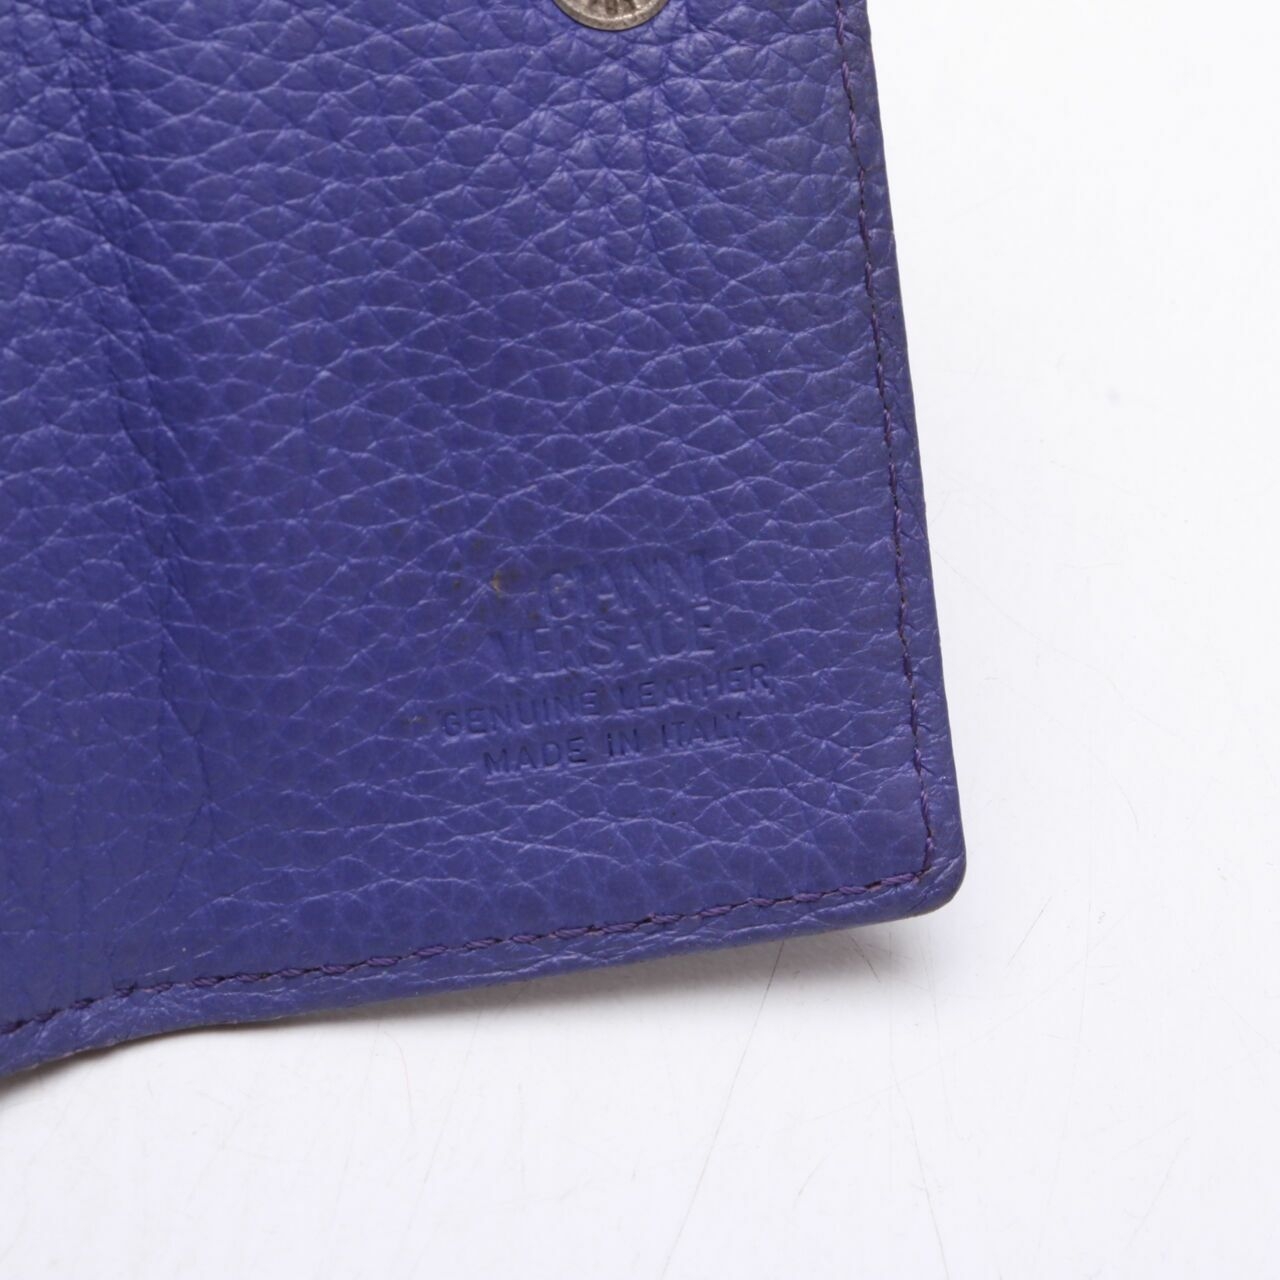 Gianni Versace Trifold Purple Wallet